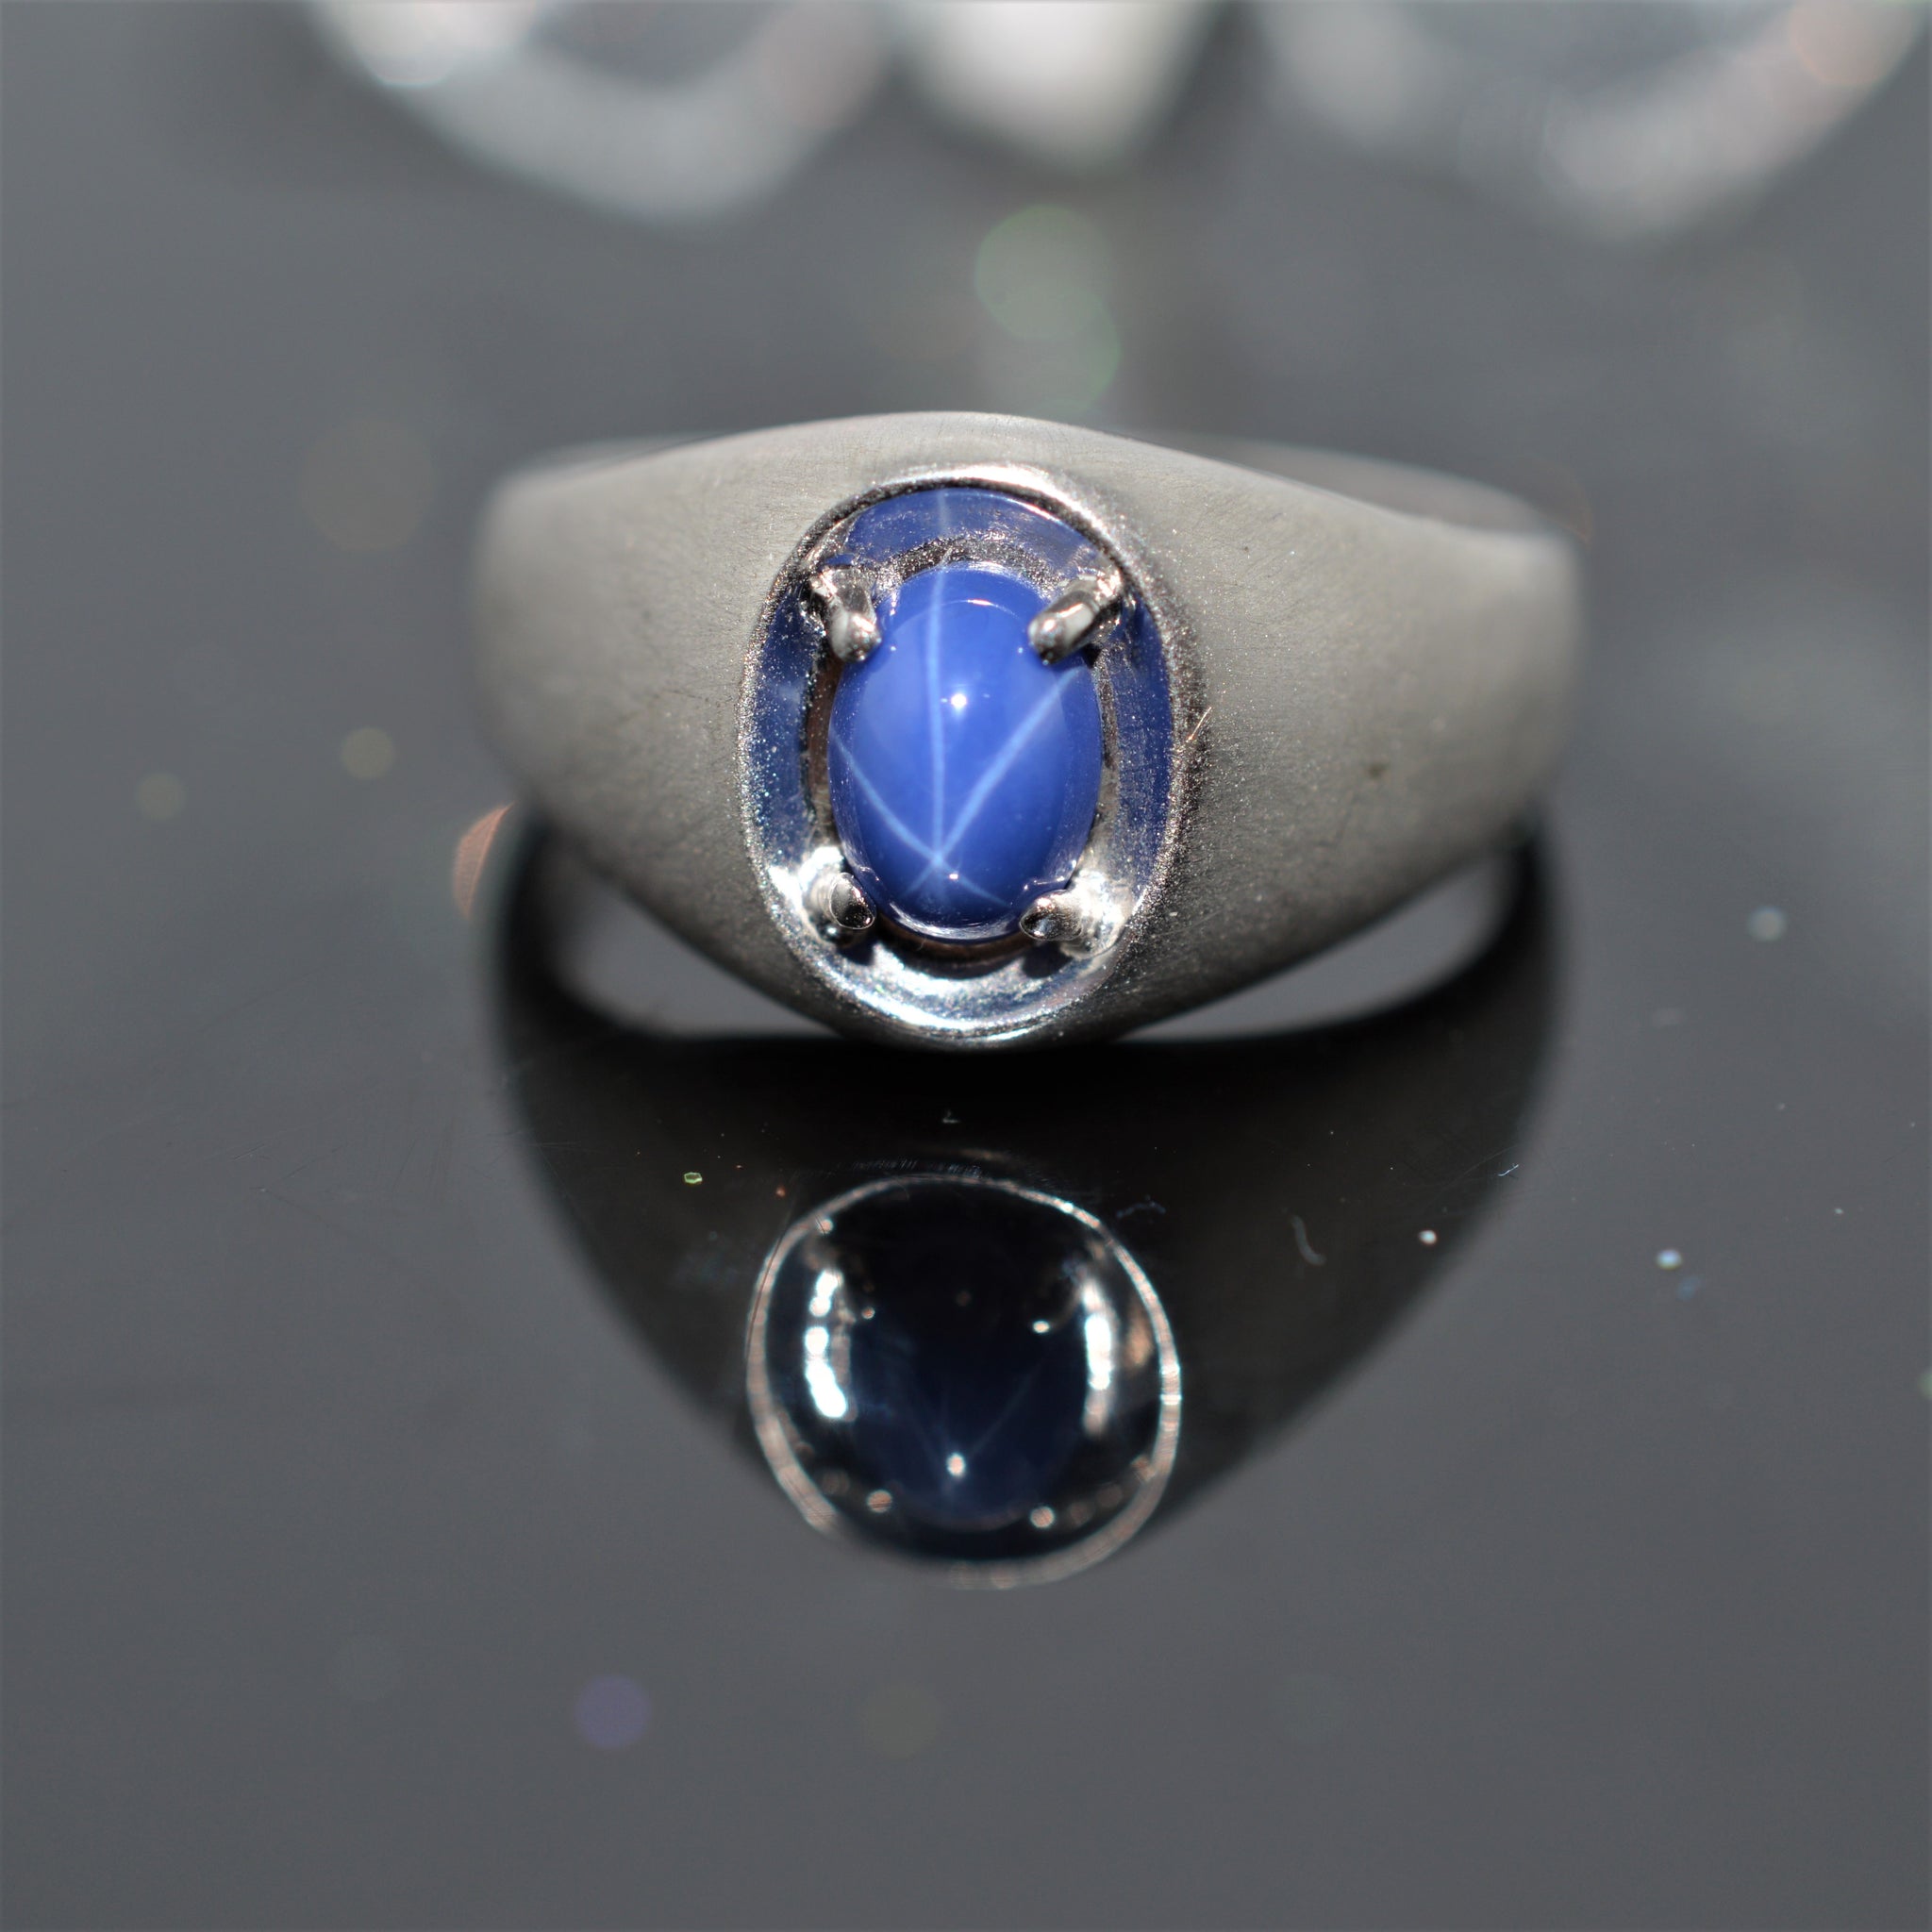 Blue Star Sapphire Ring, Leaf Ring Star Sapphire Ring, 925 Sterling Silver,  | eBay